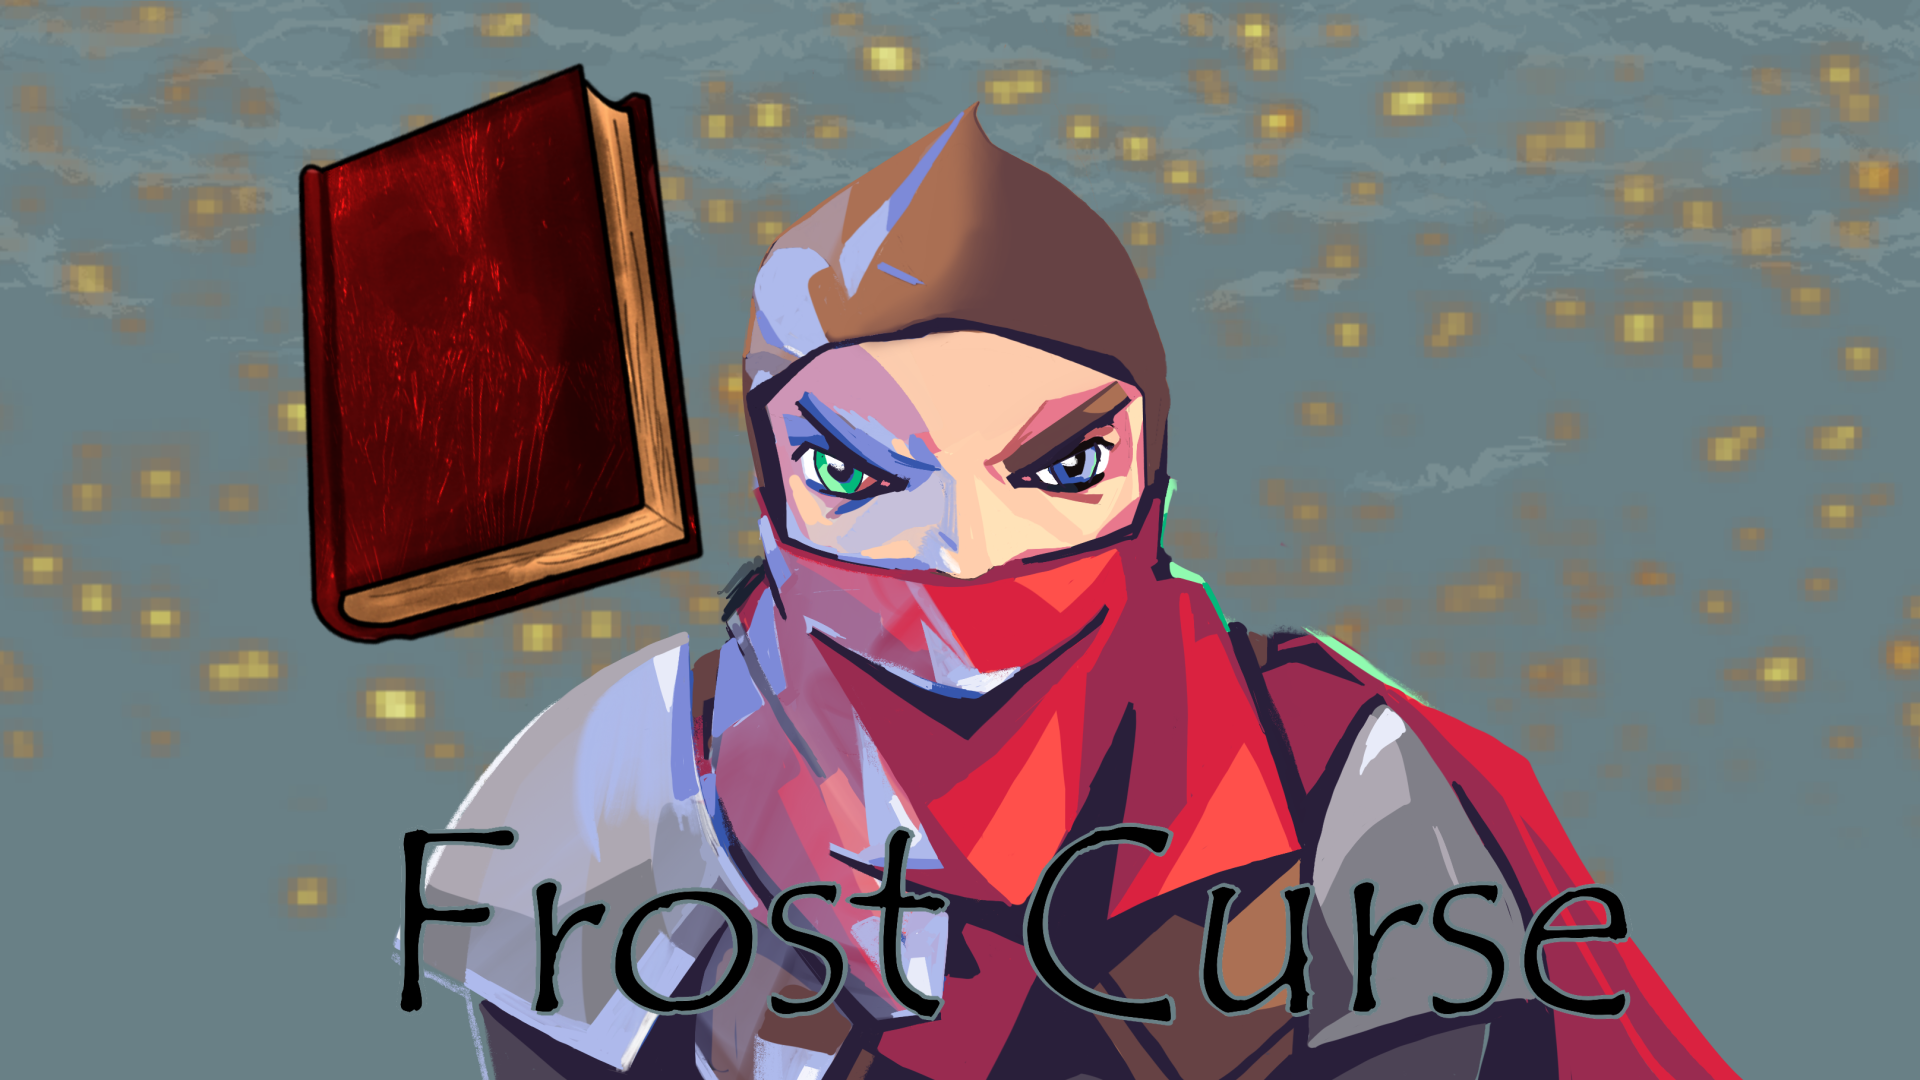 Frost Curse Demo